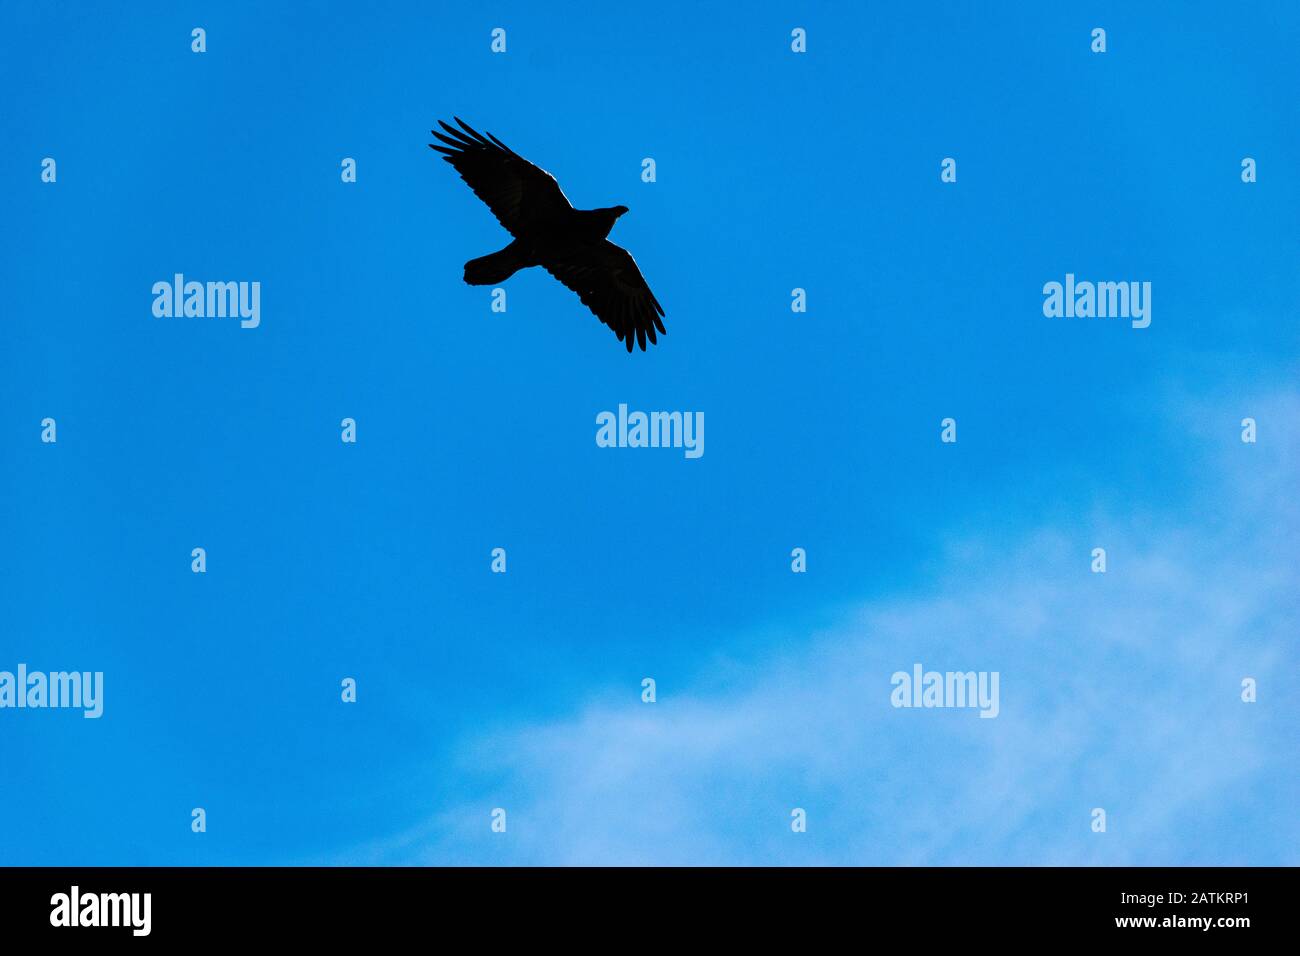 A wild predator bird flying in the sky Stock Photo